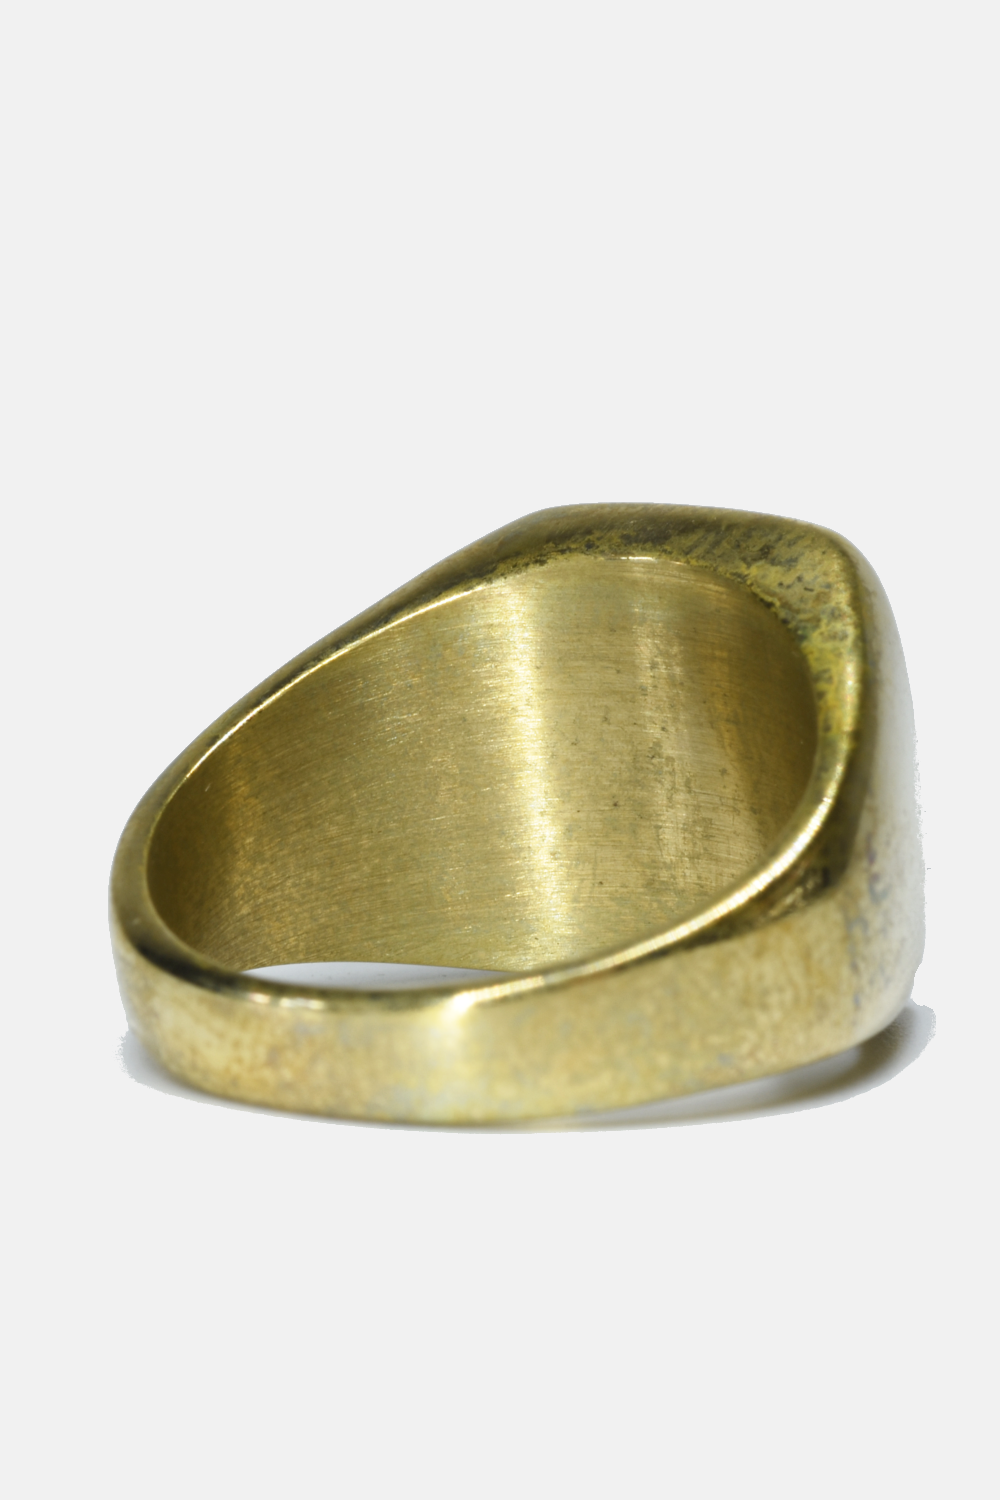 Brass Square Striped Ring: 11